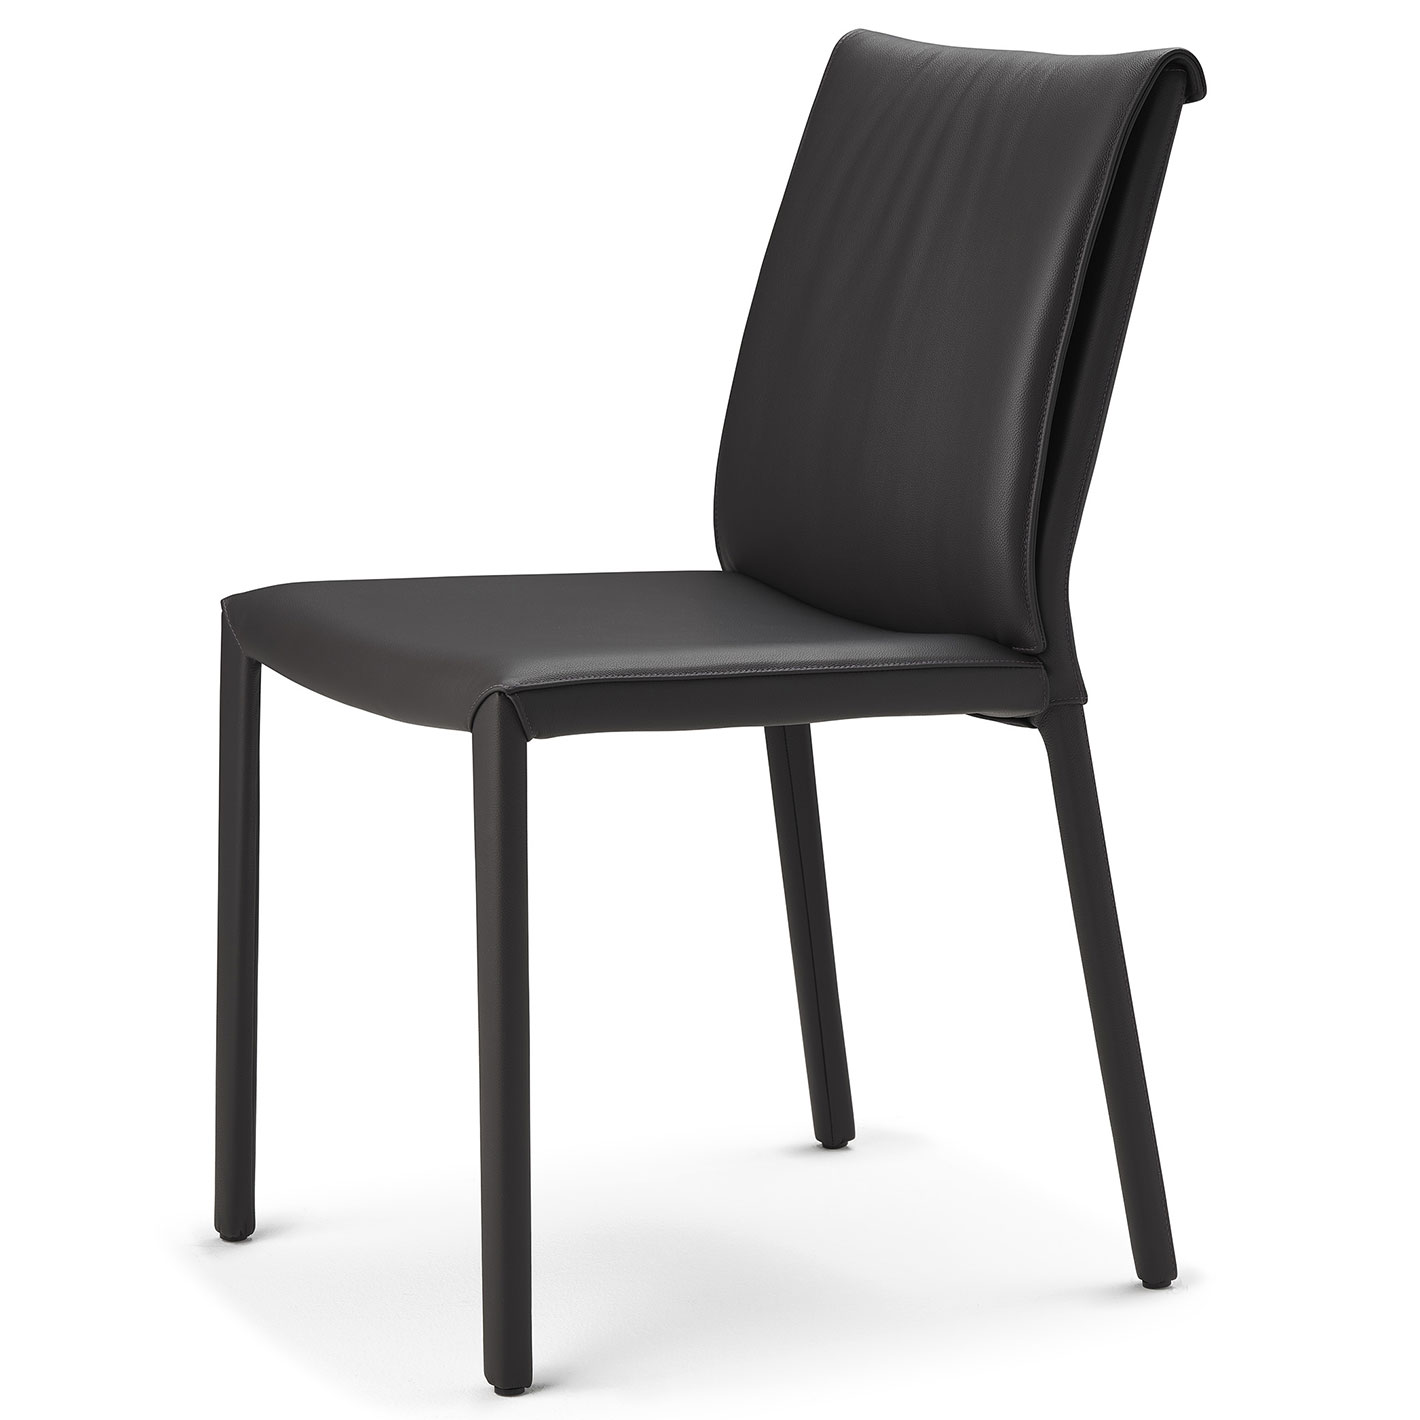 Stühle unter 500 Euro - ITALIA Stuhl